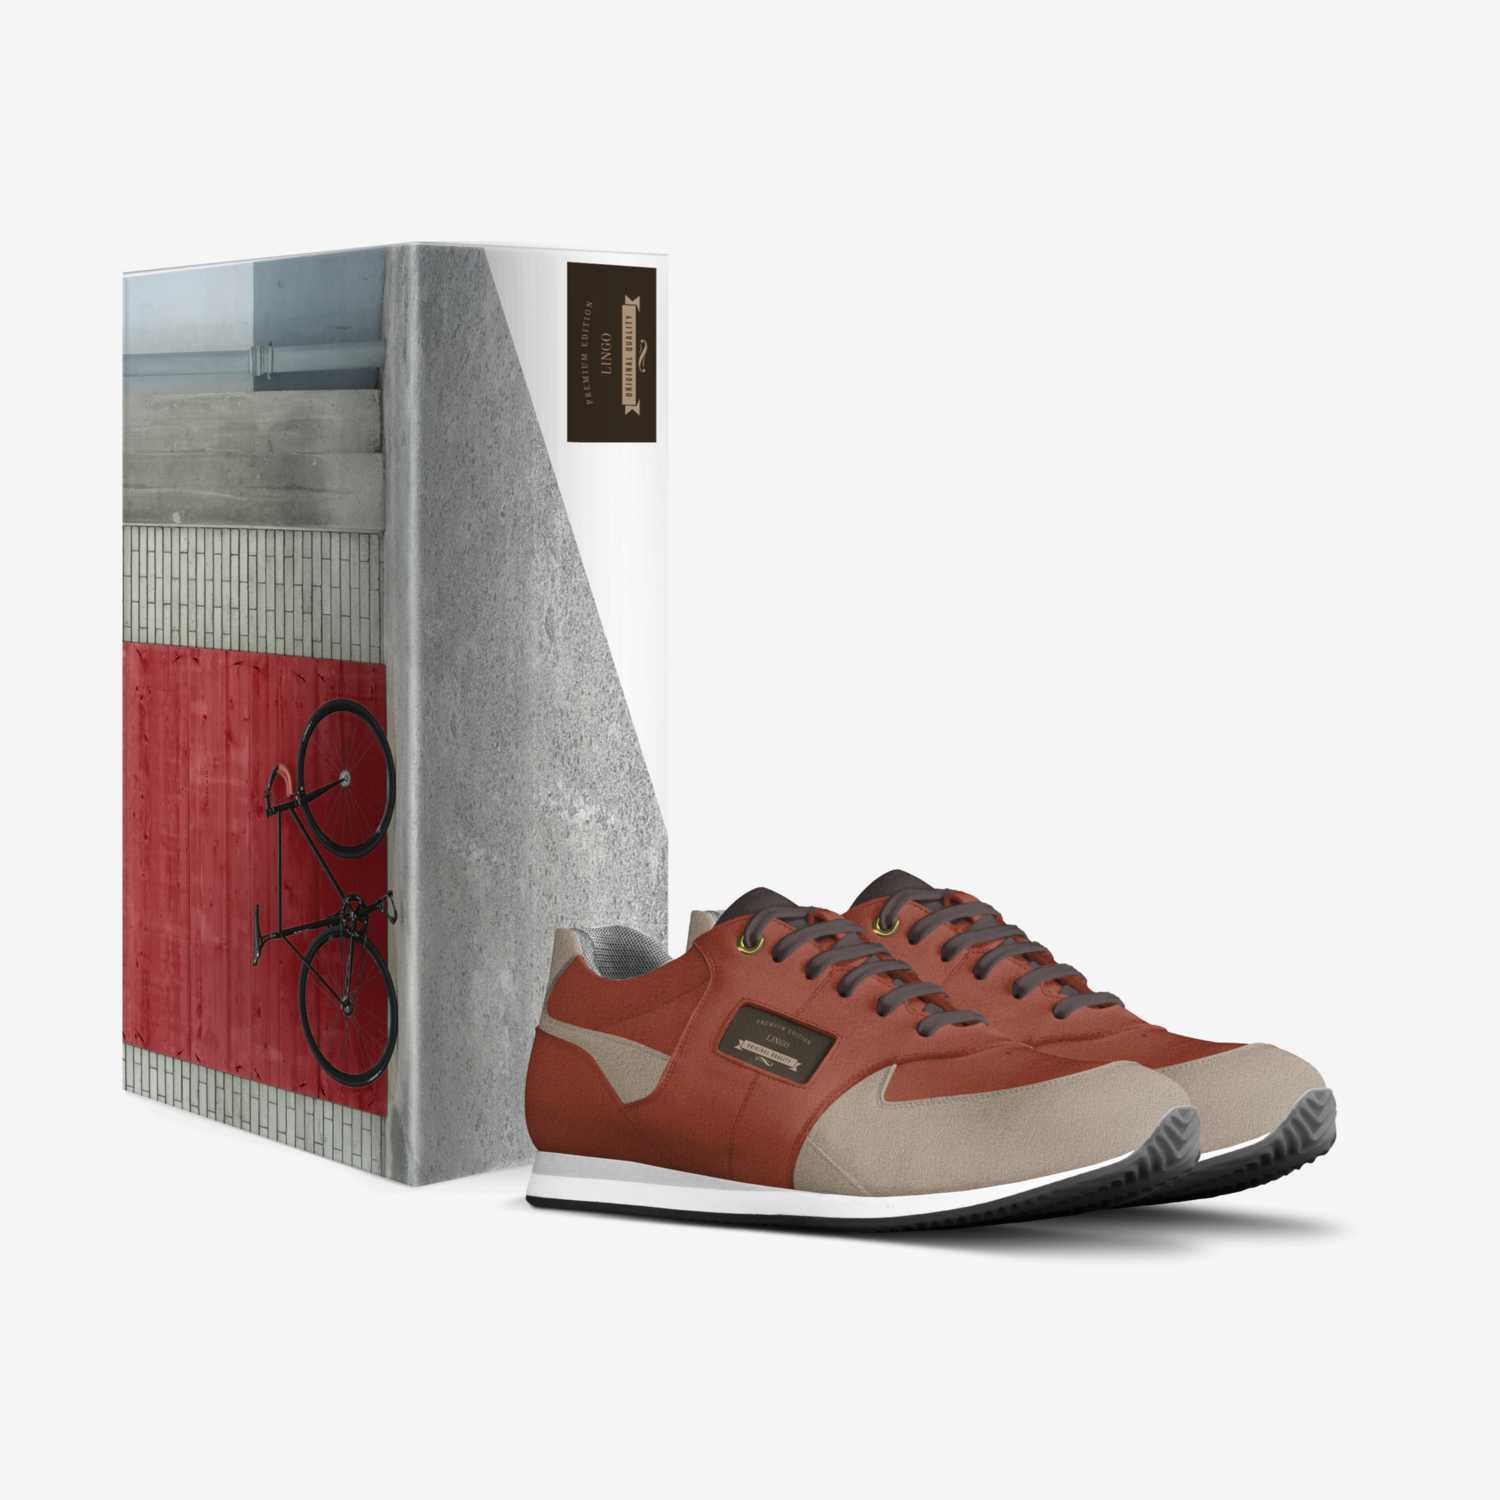 Lingo custom made in Italy shoes by Azriel Barrow | Box view